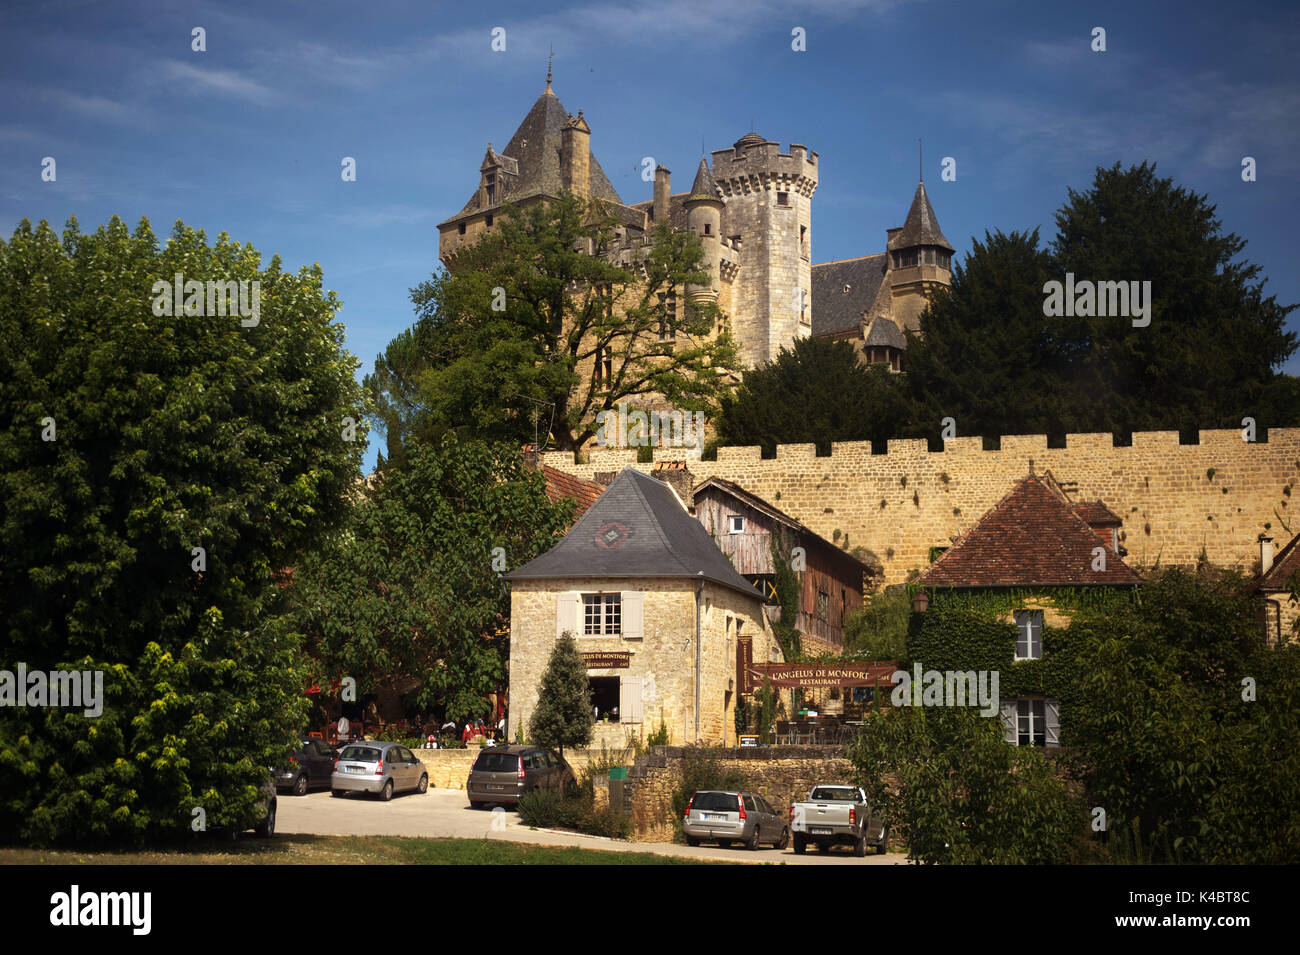 Chateau of Montfort, Vitrac, Dordogne, France Stock Photo